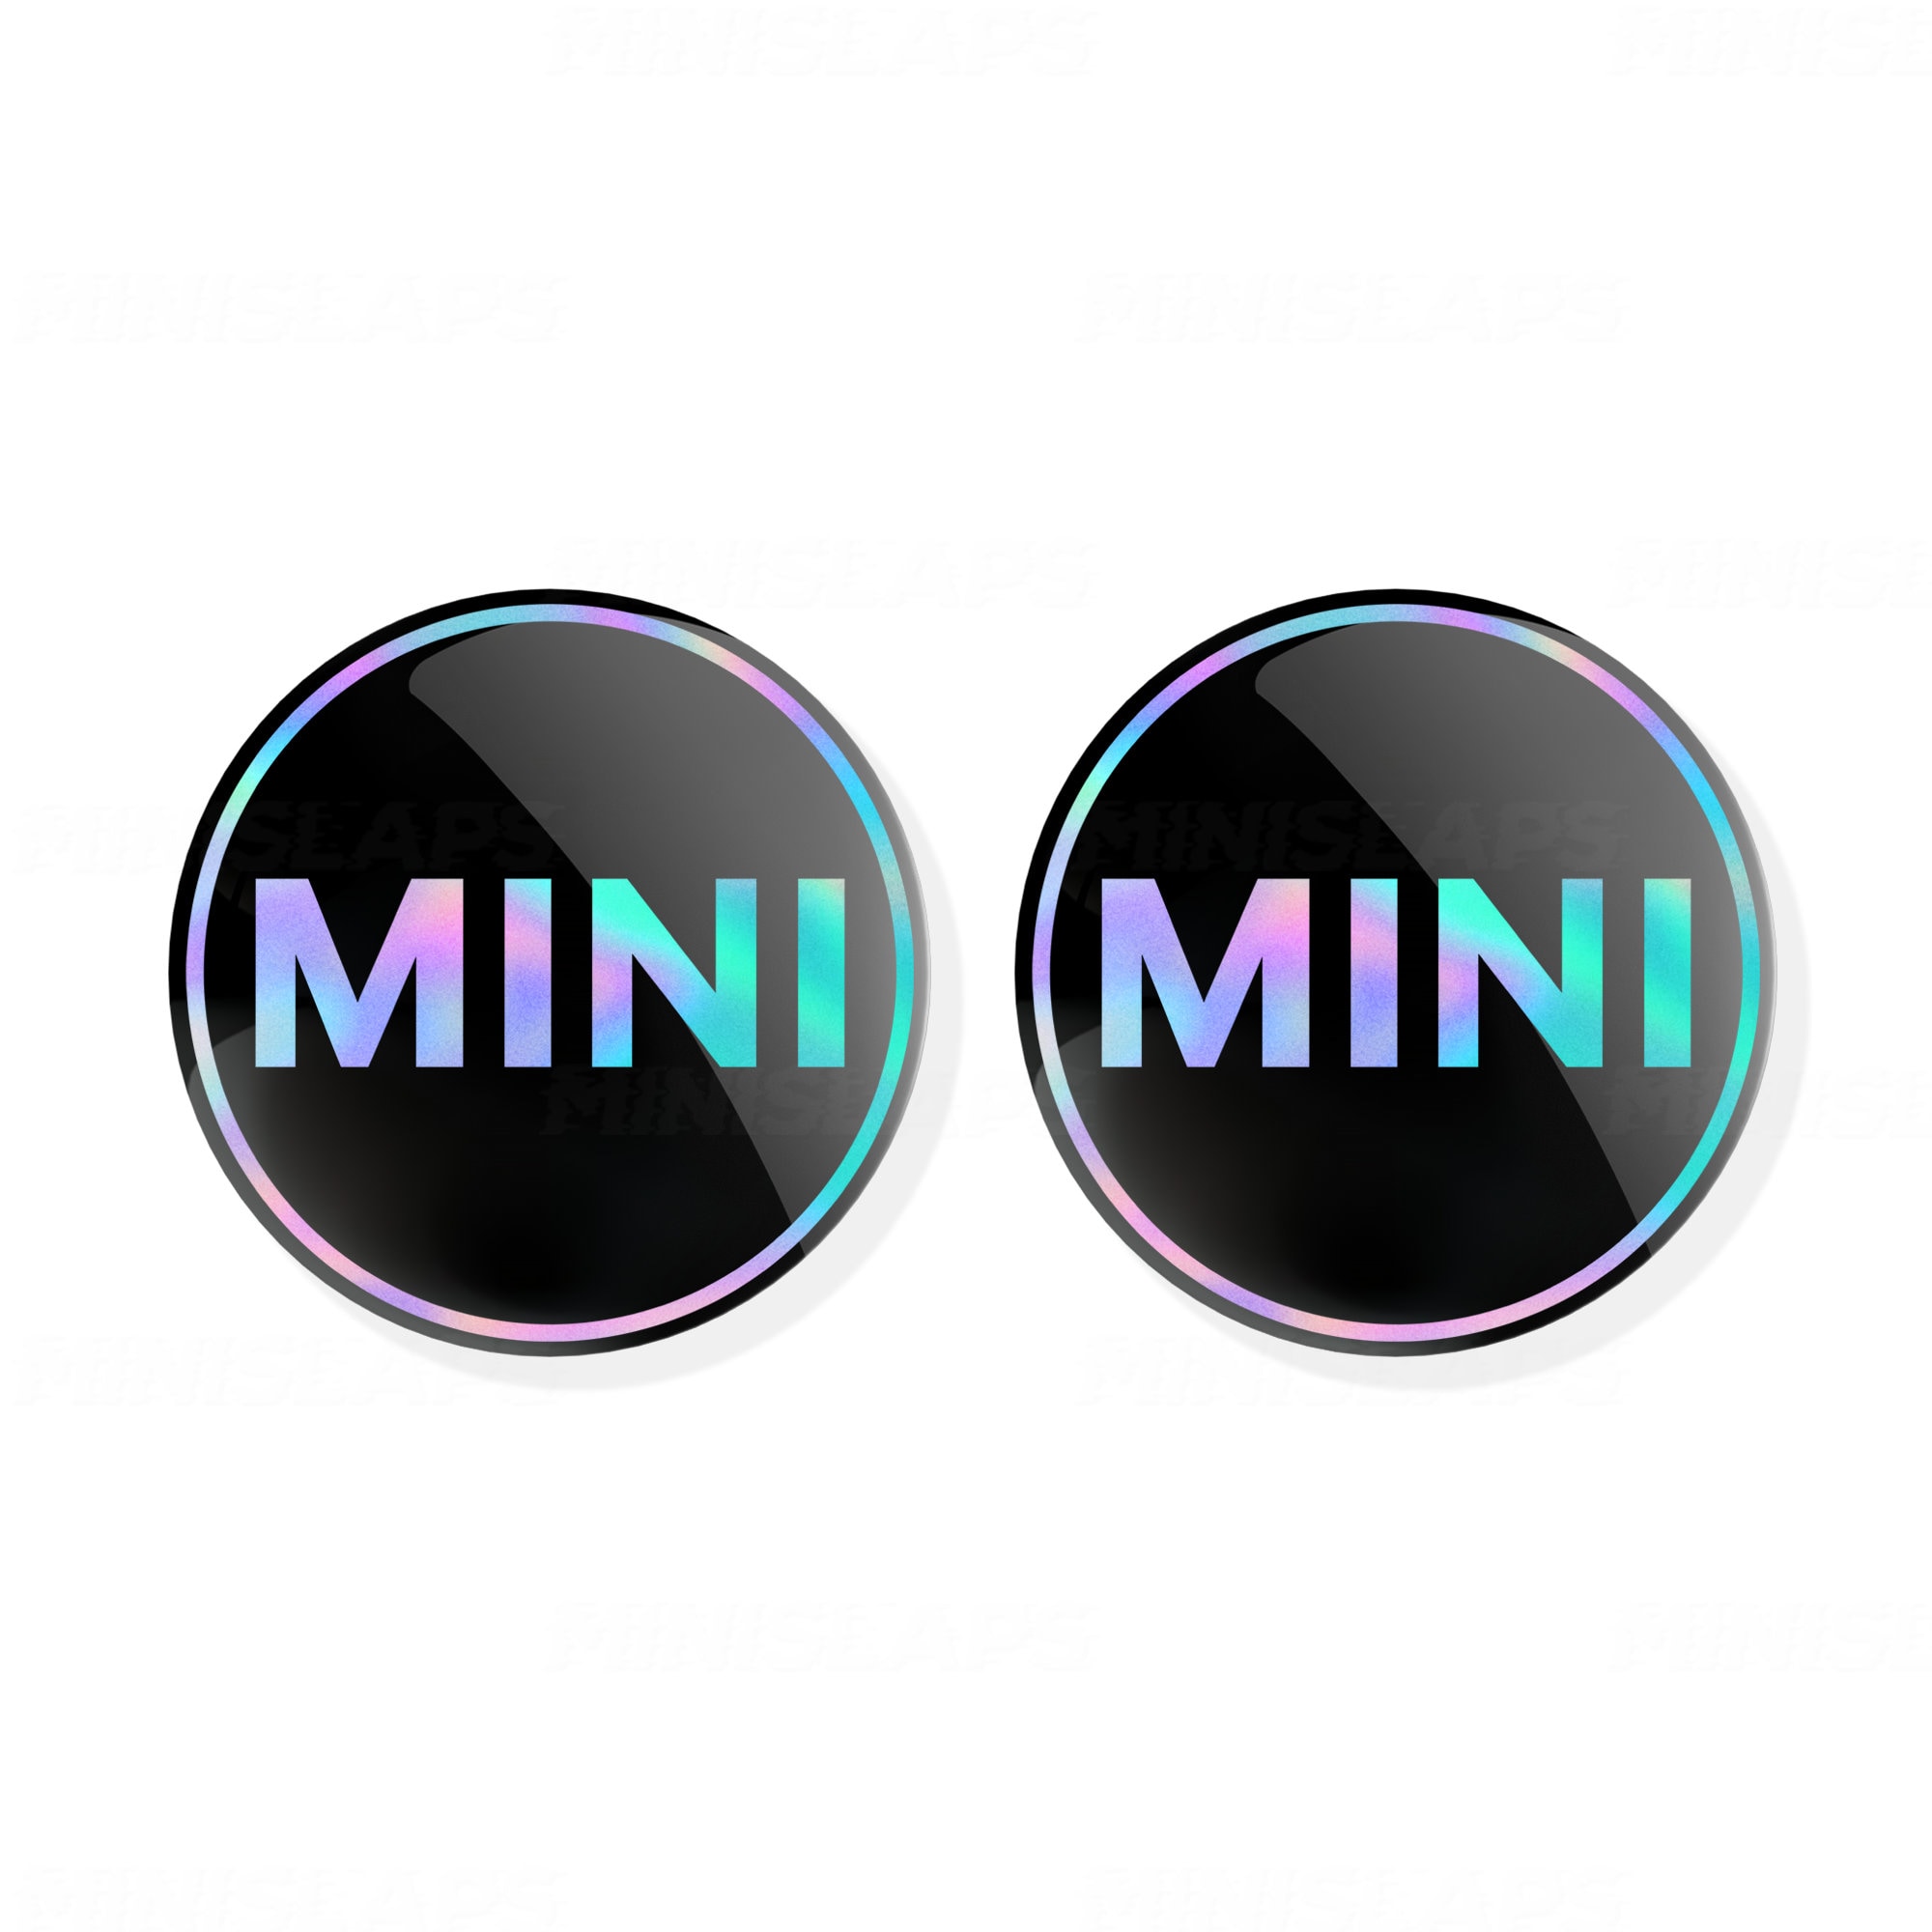 MINI Personal Accessories, Official MINI Collection